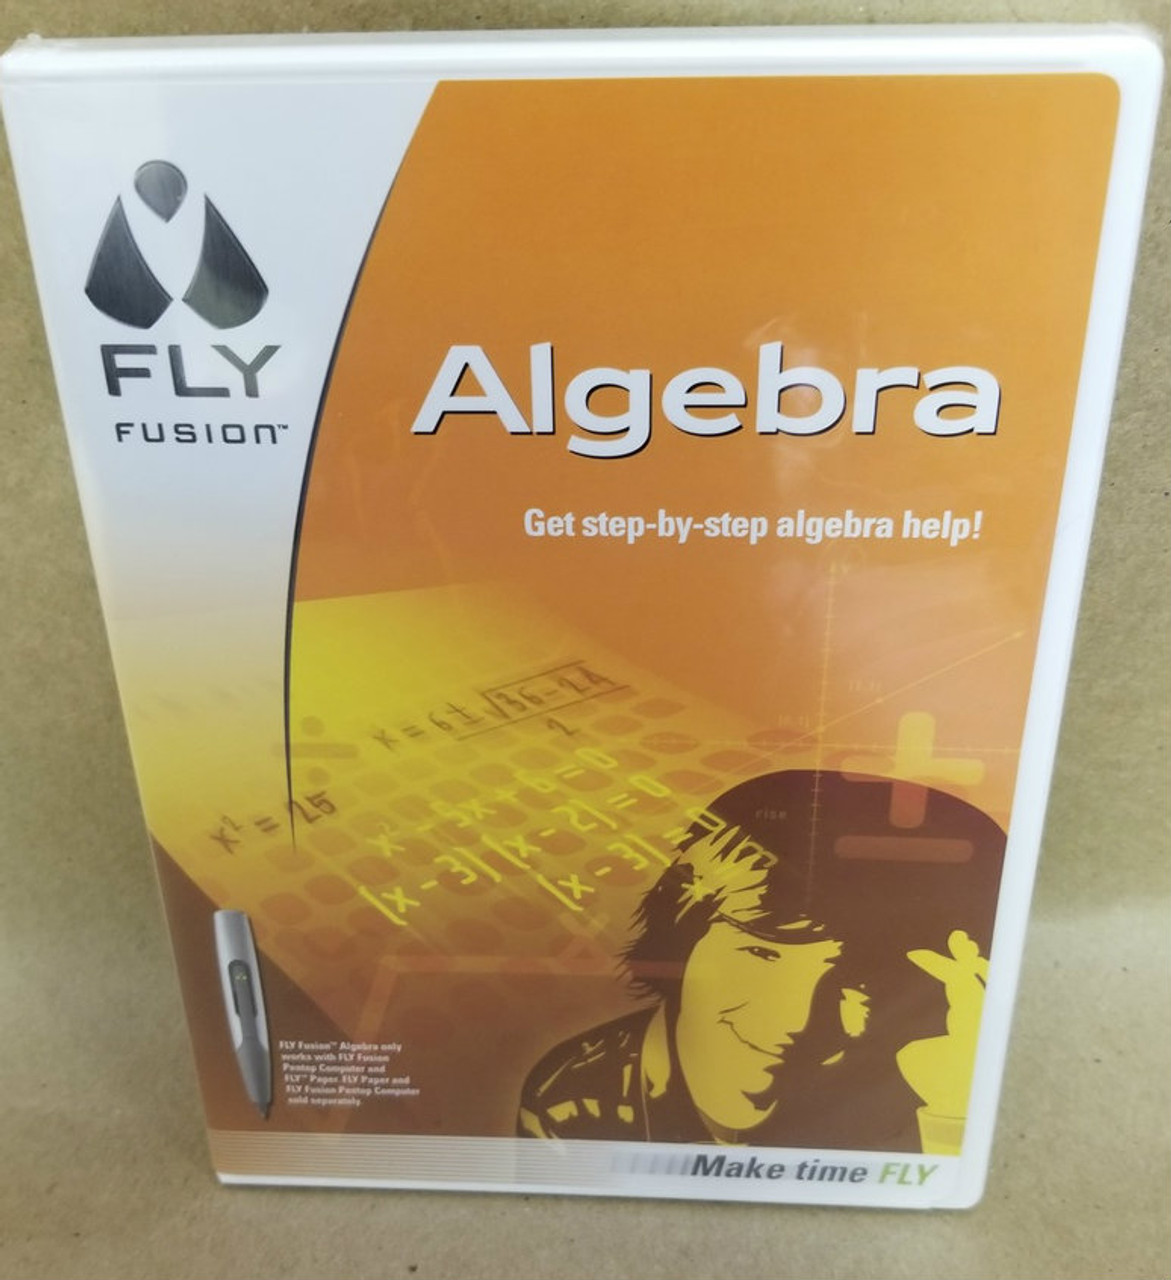 Fly Fusion Algebra by LEAPFROG